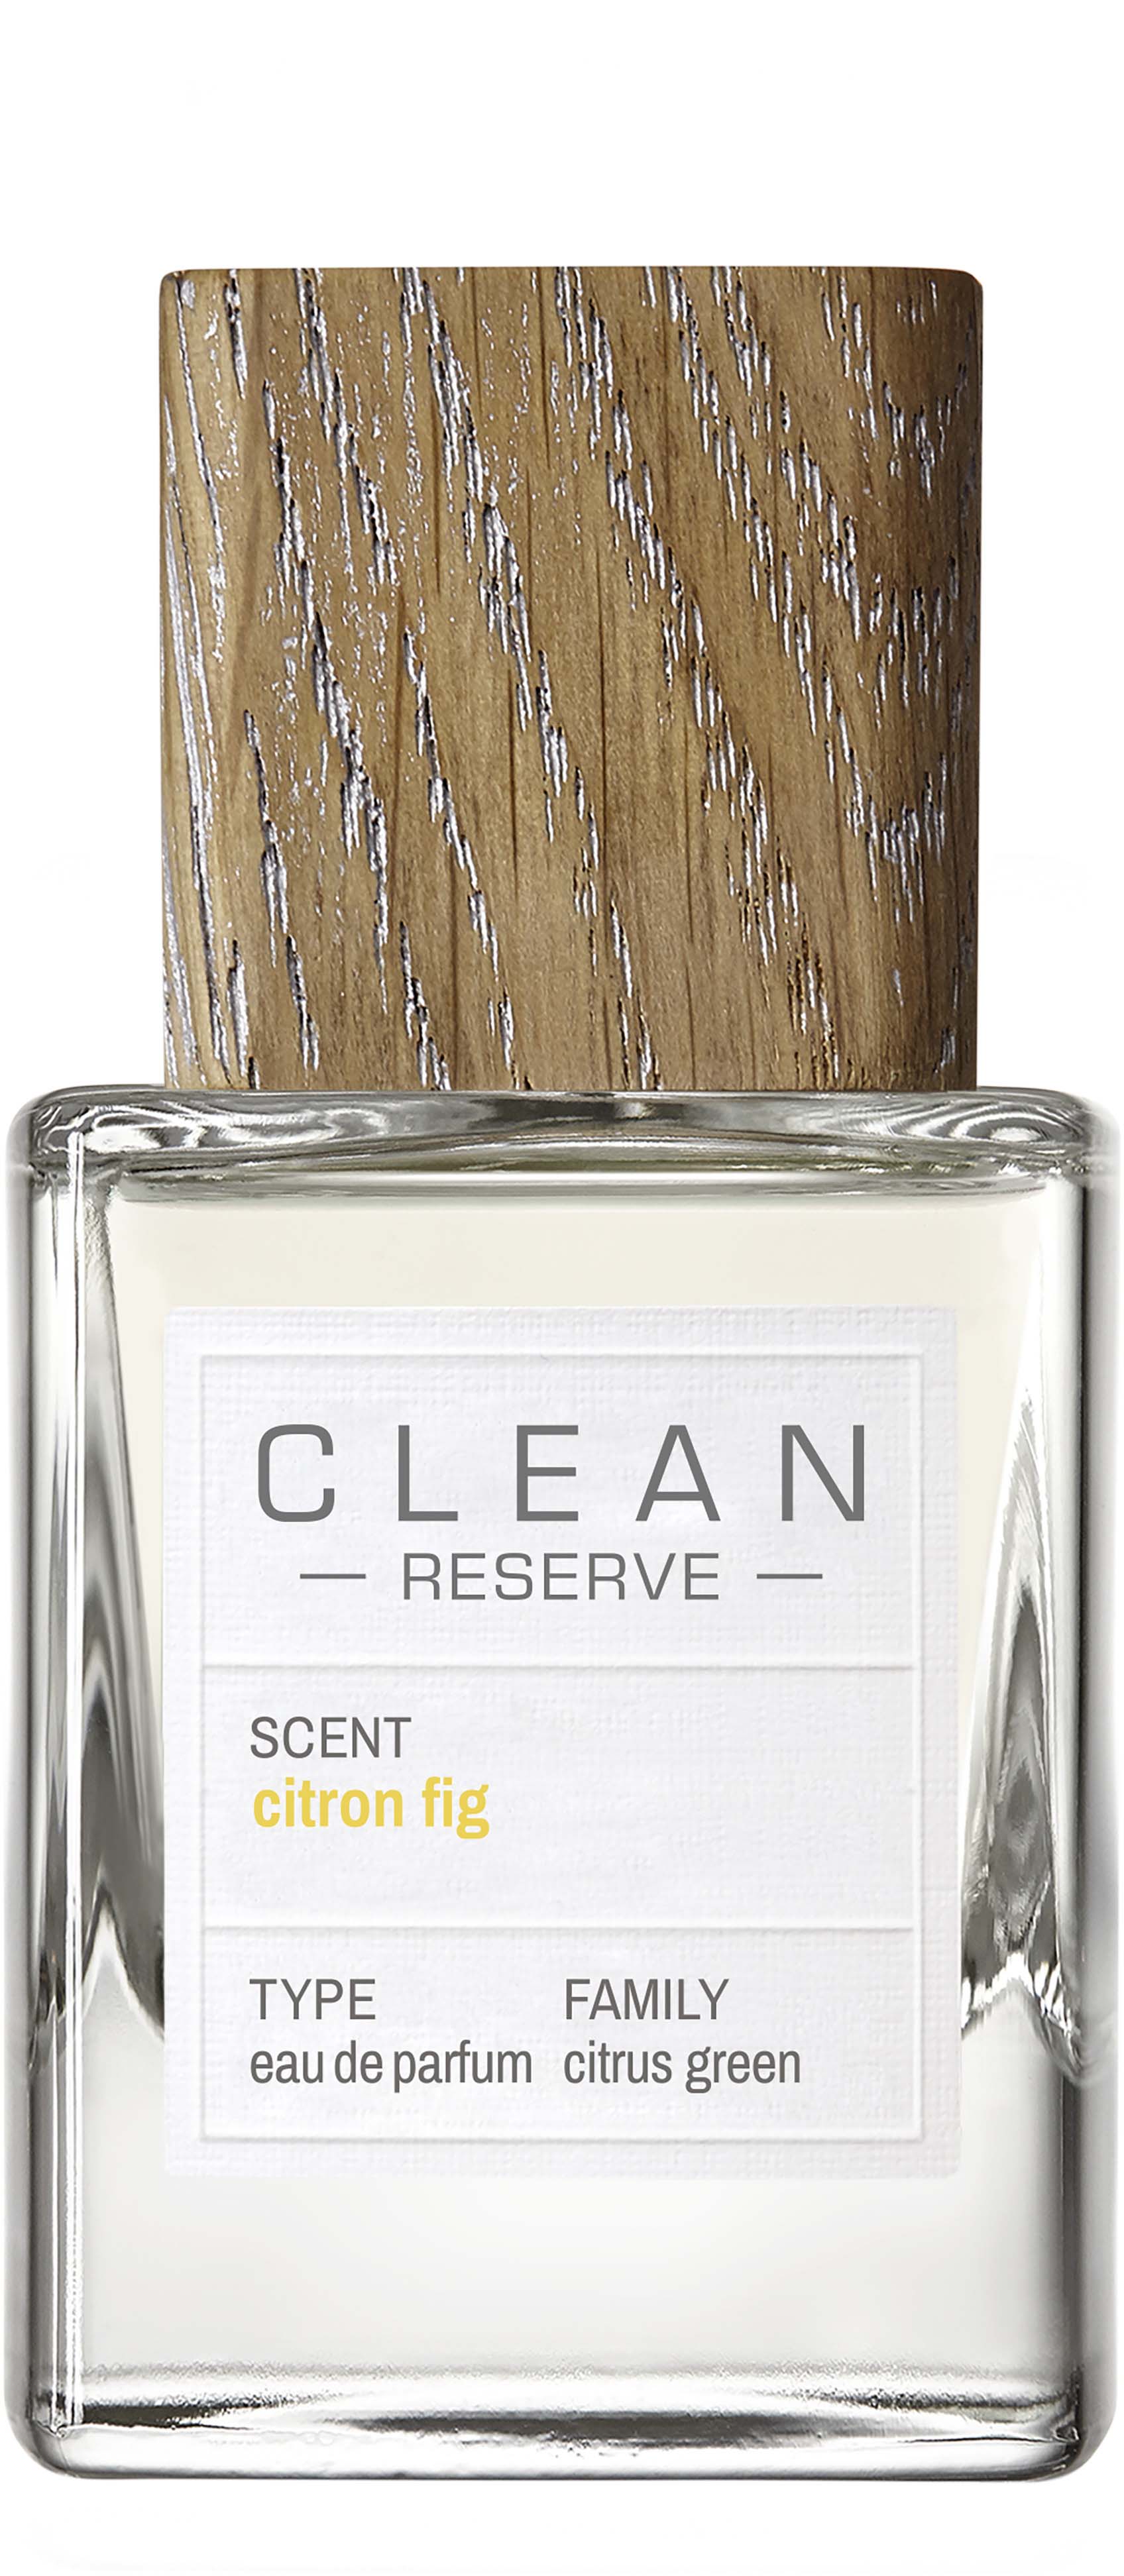 clean clean reserve - citron fig woda perfumowana 30 ml   